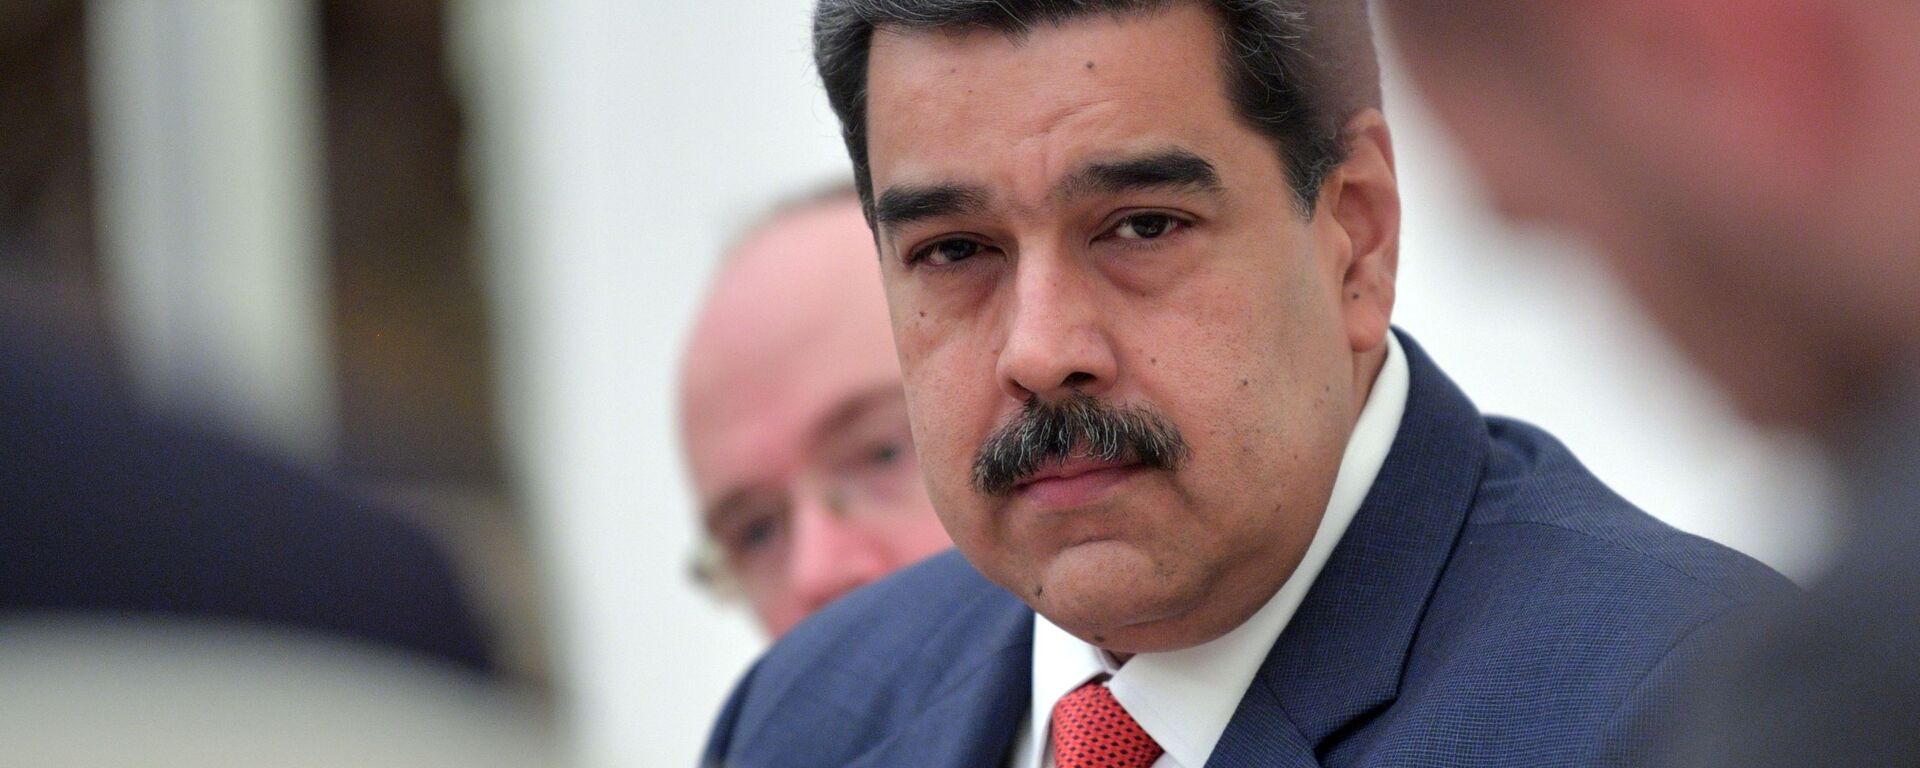 Venezuelan President Nicolas Maduro. File photo. - Sputnik International, 1920, 03.11.2021